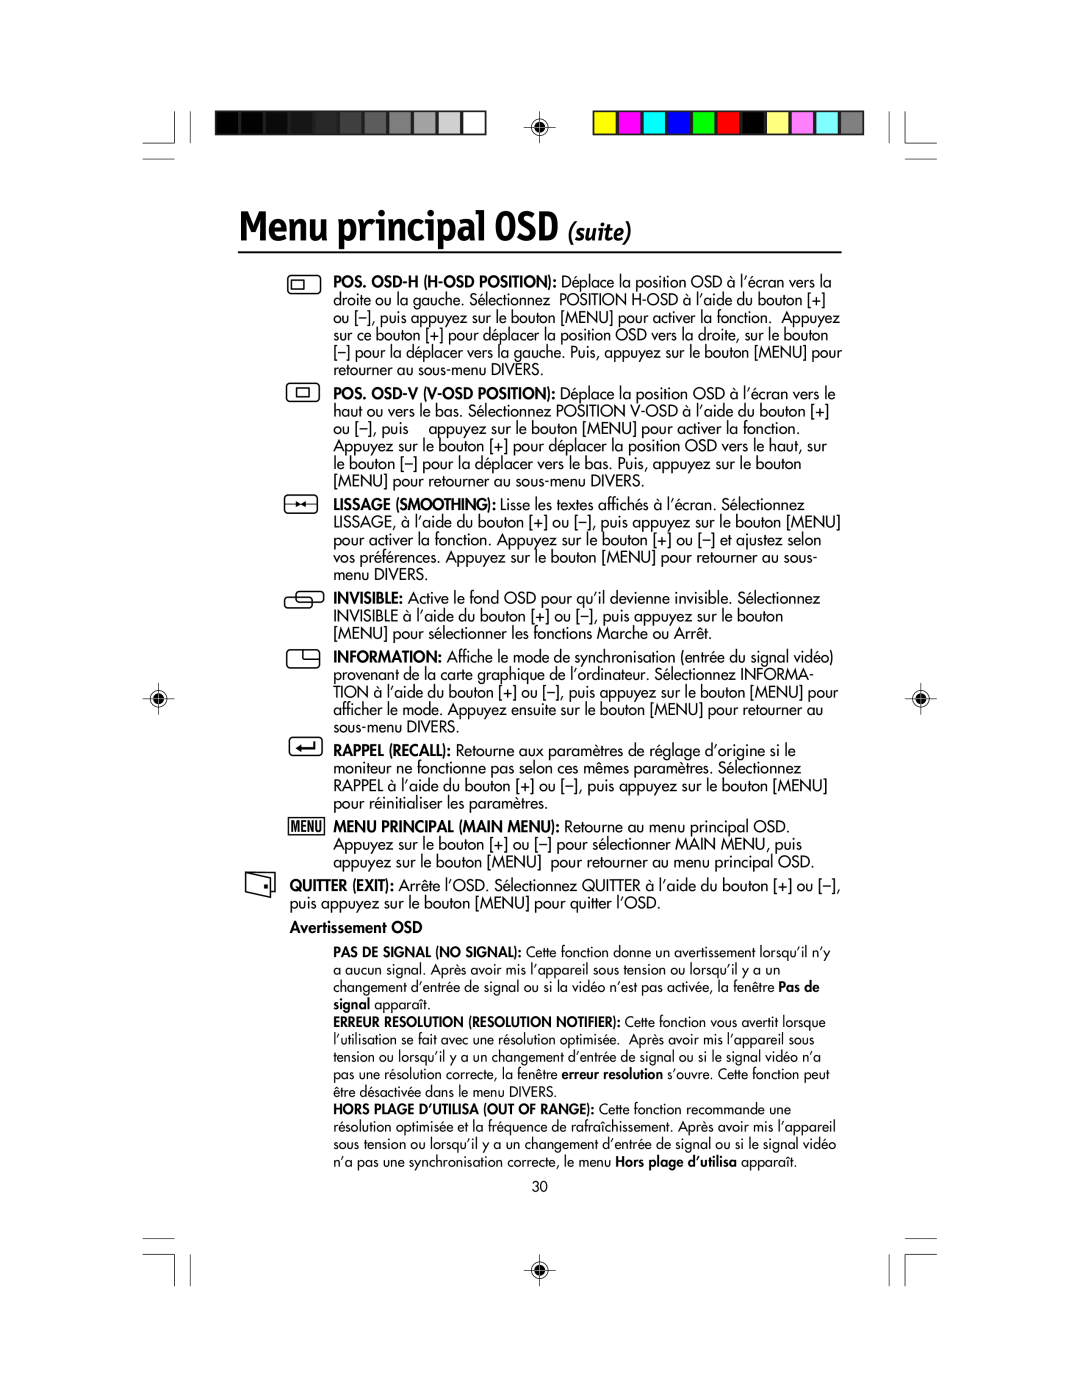 NEC LCD1920NX manual Menu principal OSD suite, Avertissement OSD 